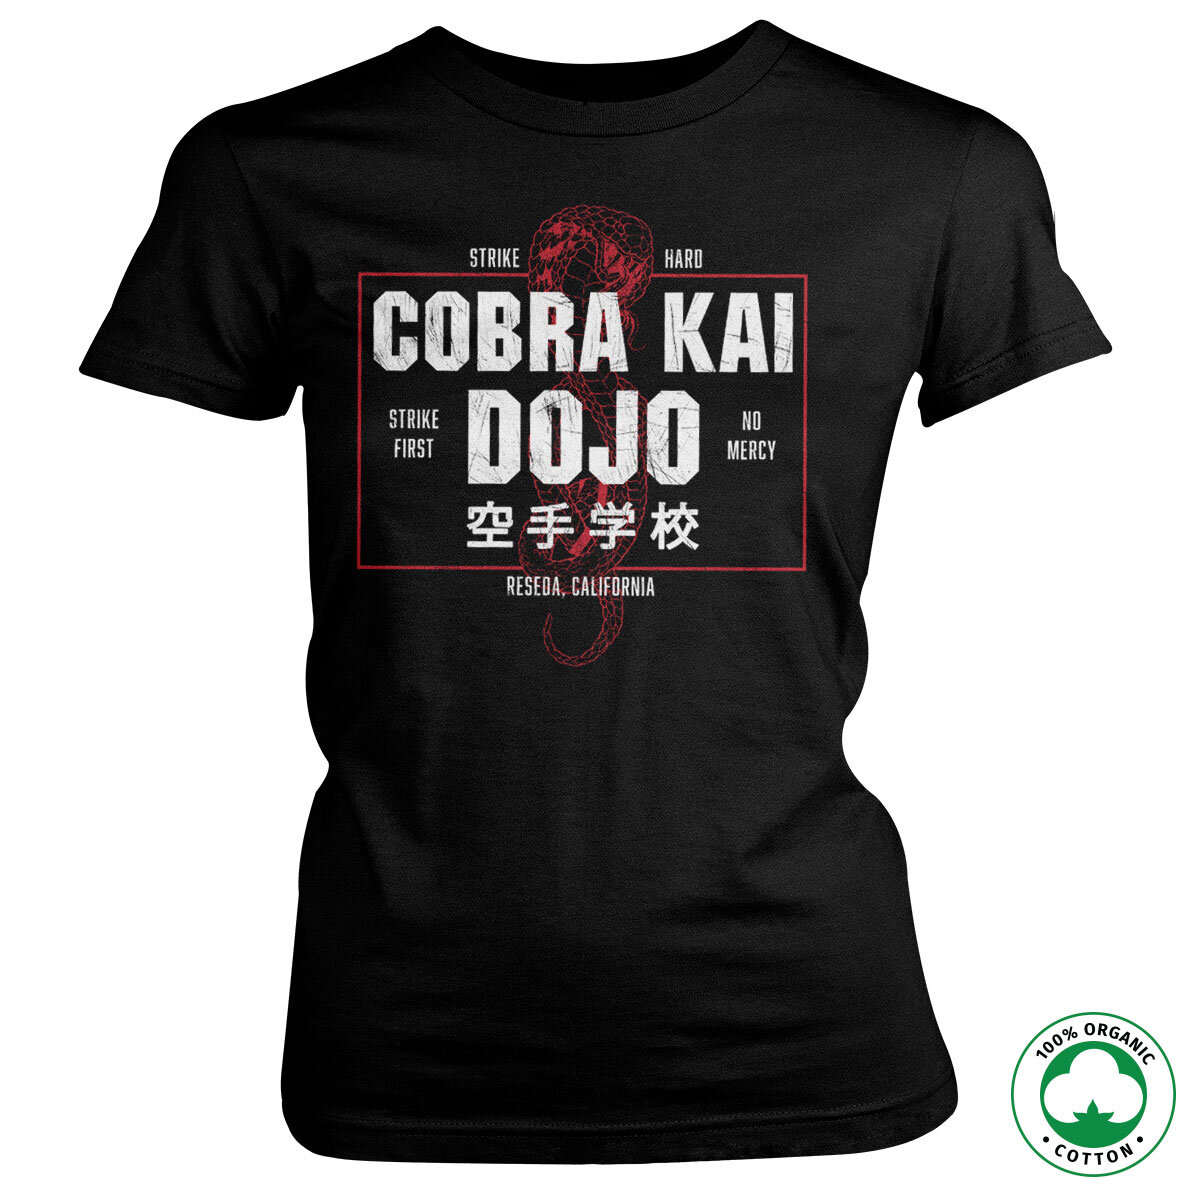 Modish Pearly Armstrong Cobra Kai Dojo Big & Tall T-Shirt - Shirtstore